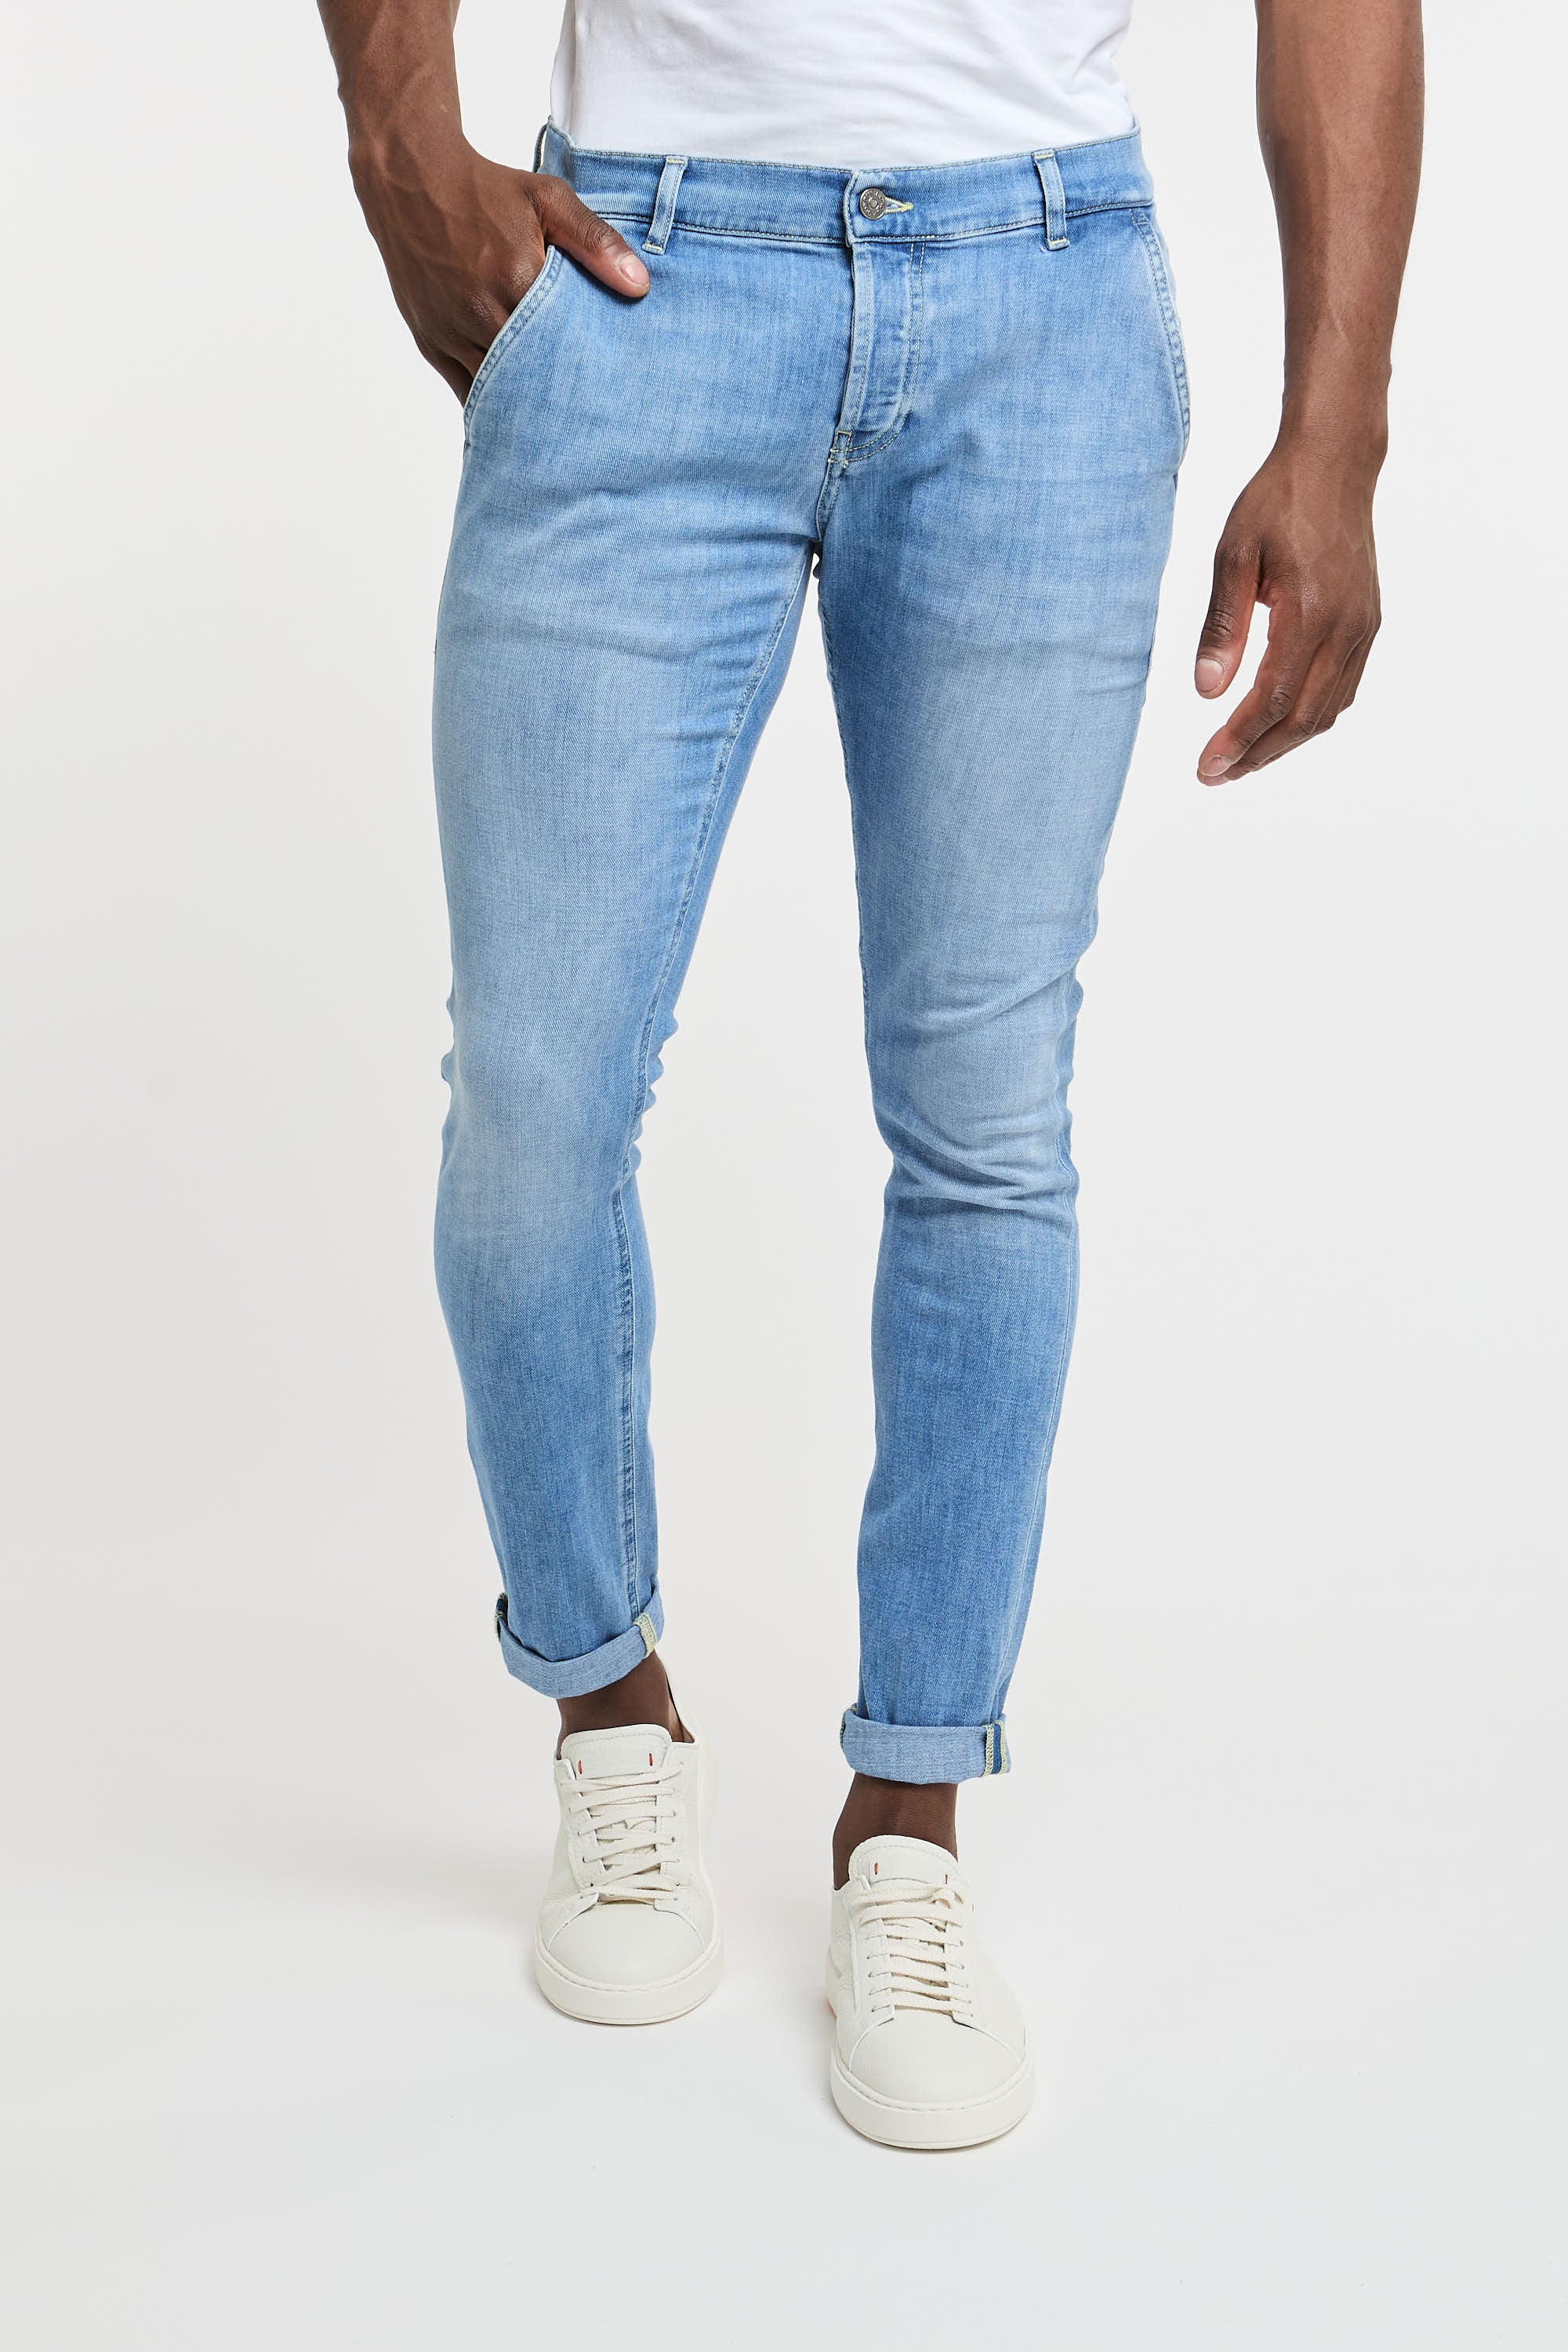 Dondup Konor Jeans Cotton/Elastomultiester/Elastane Denim-1